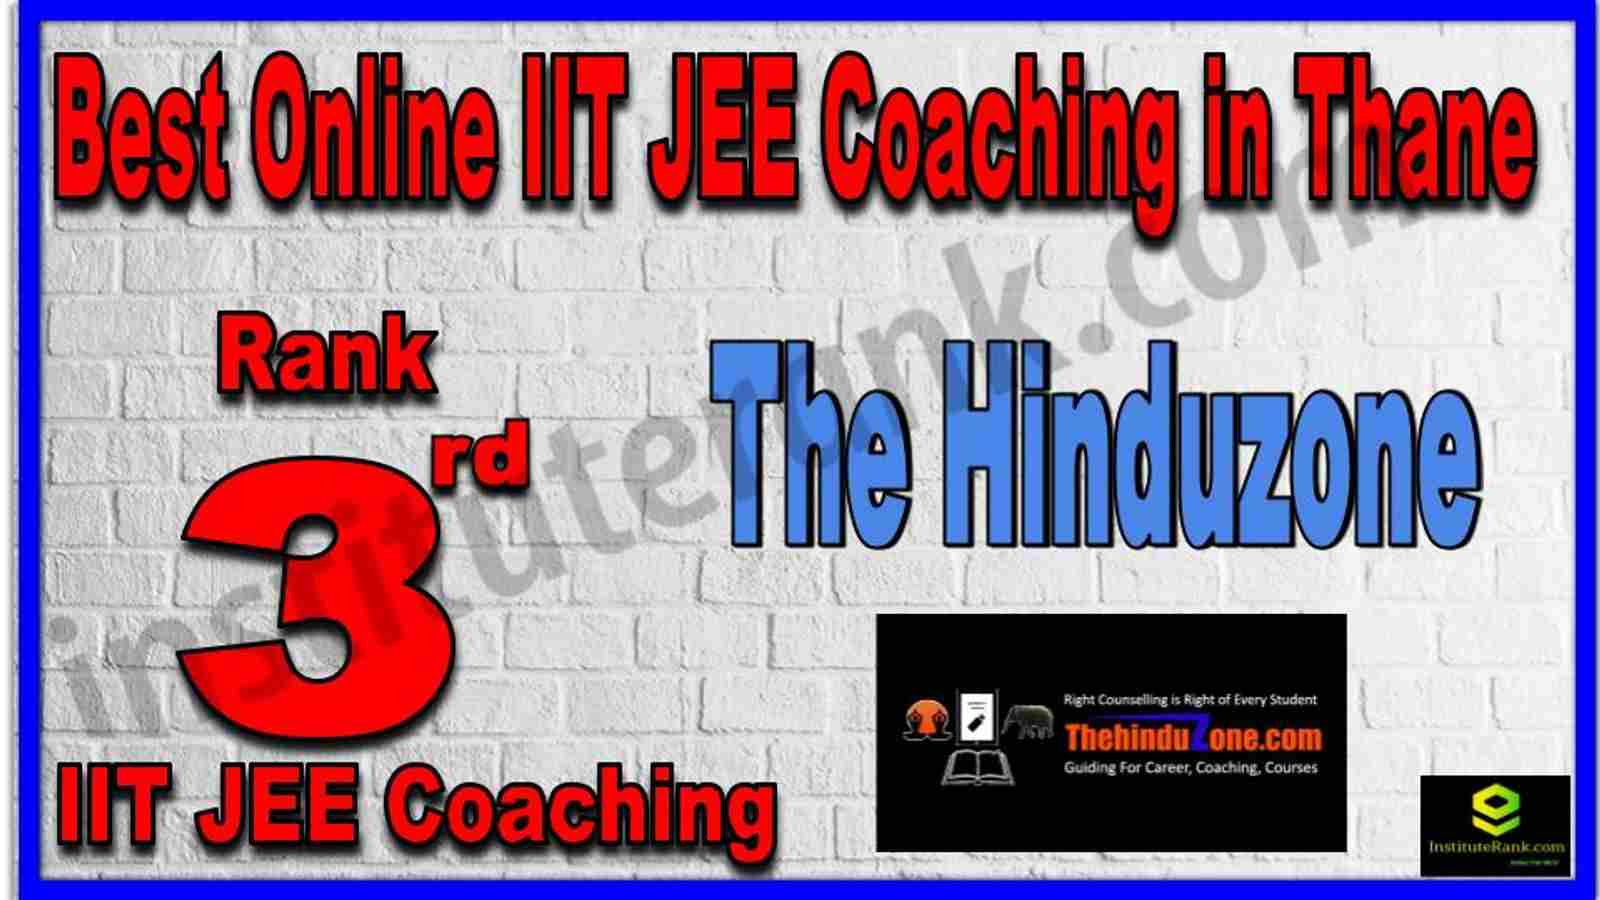 Rank 3rd Best Online IIT JEE Coaching in Thane